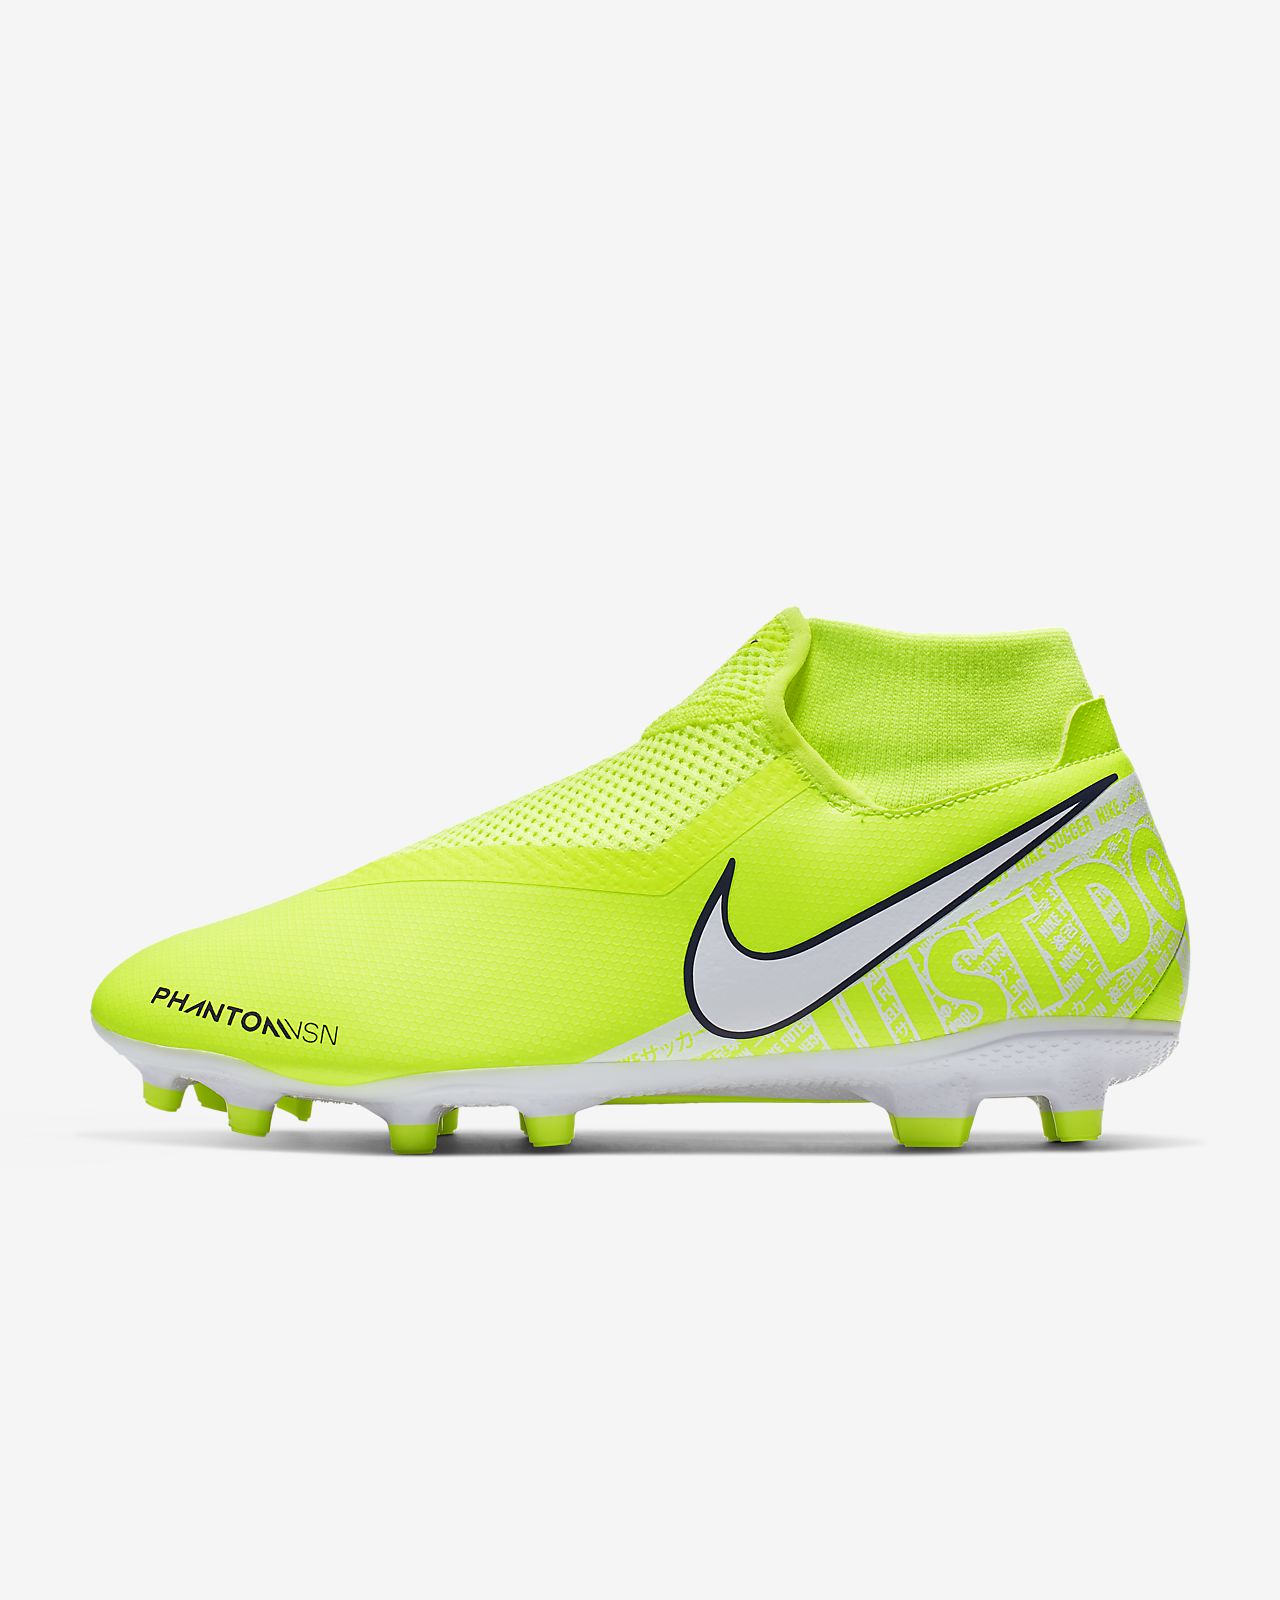 Nike Hypervenom Phantom III FG Soccer Cleats 